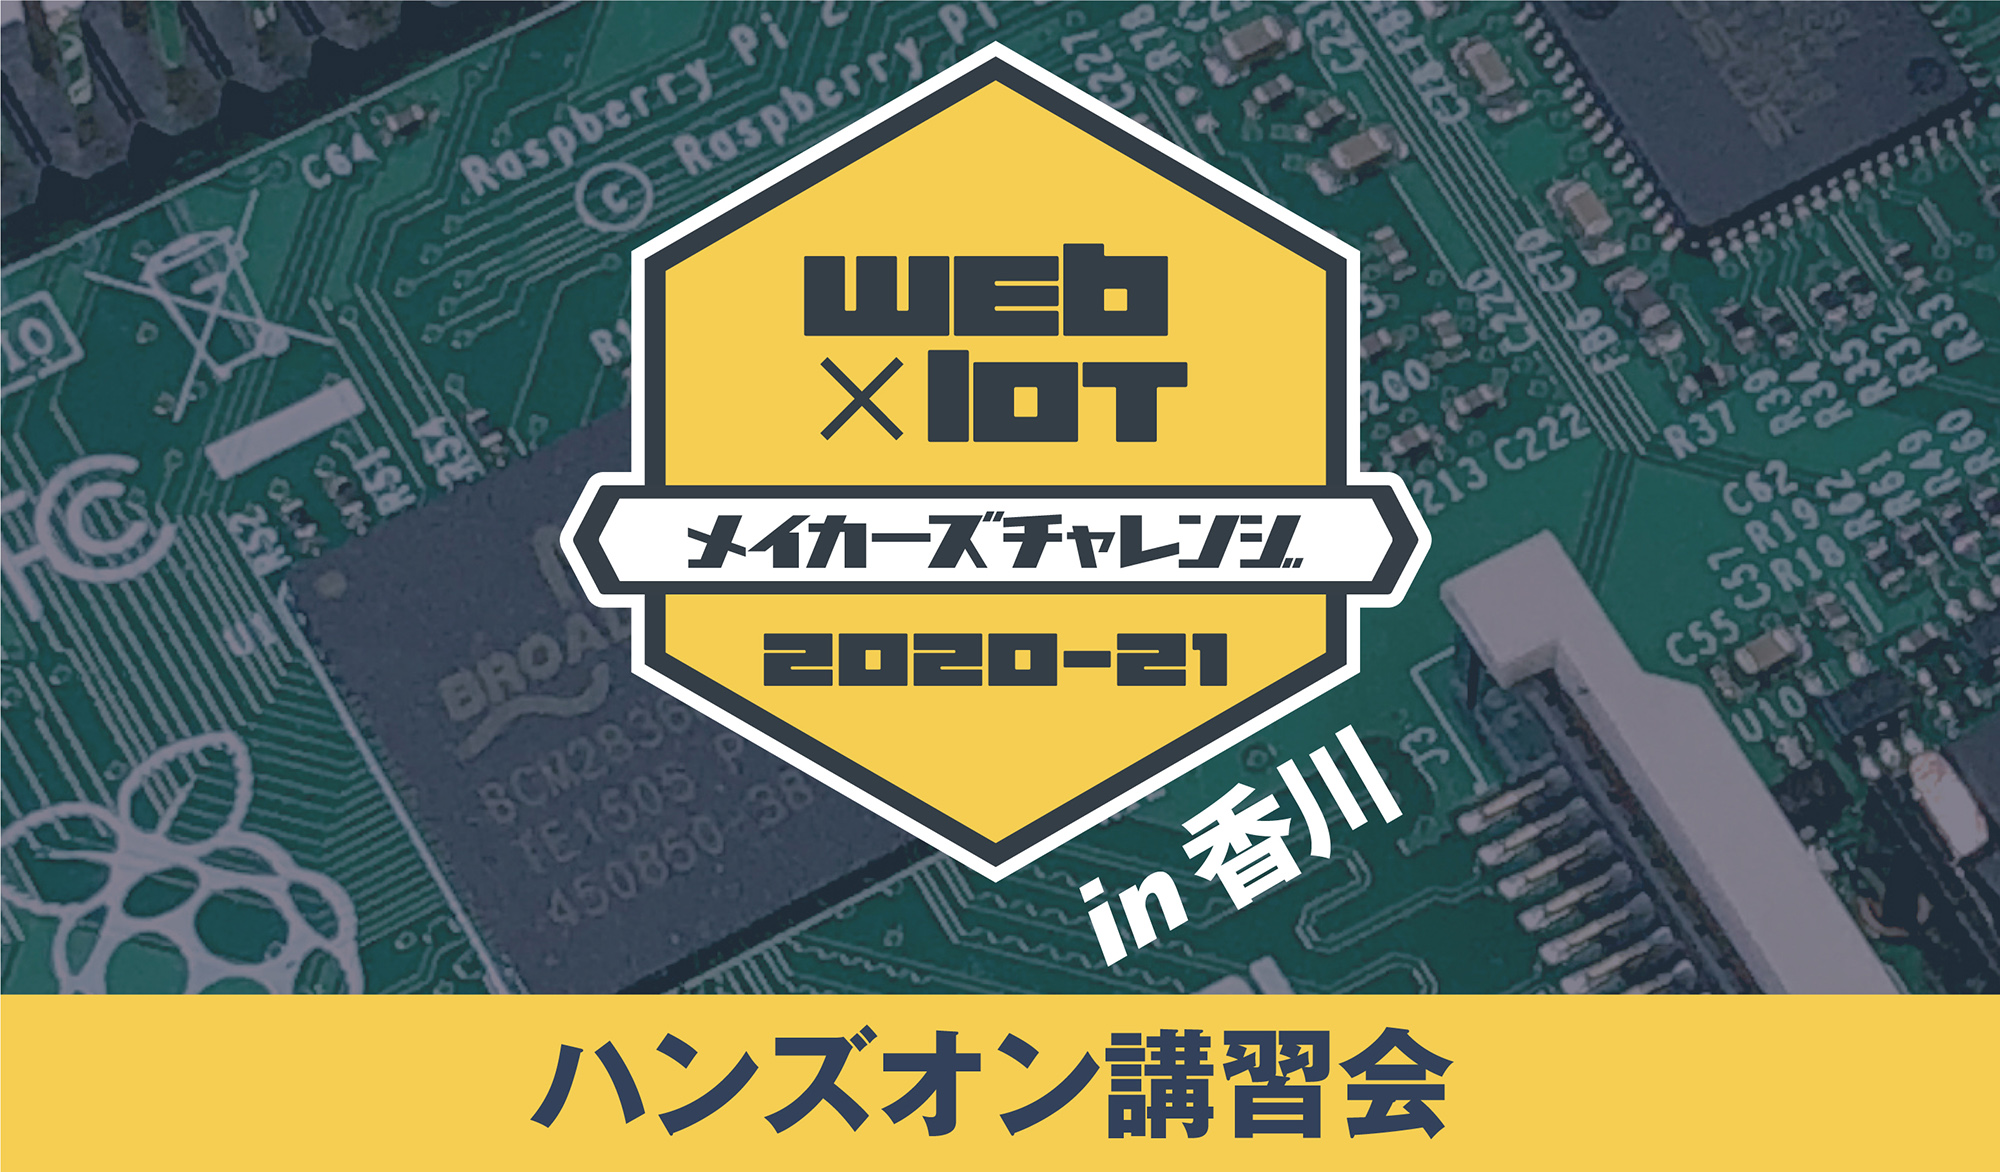 Web × IoT メイカーズチャレンジ 2020-21 in 香川　ハンズオン講習会